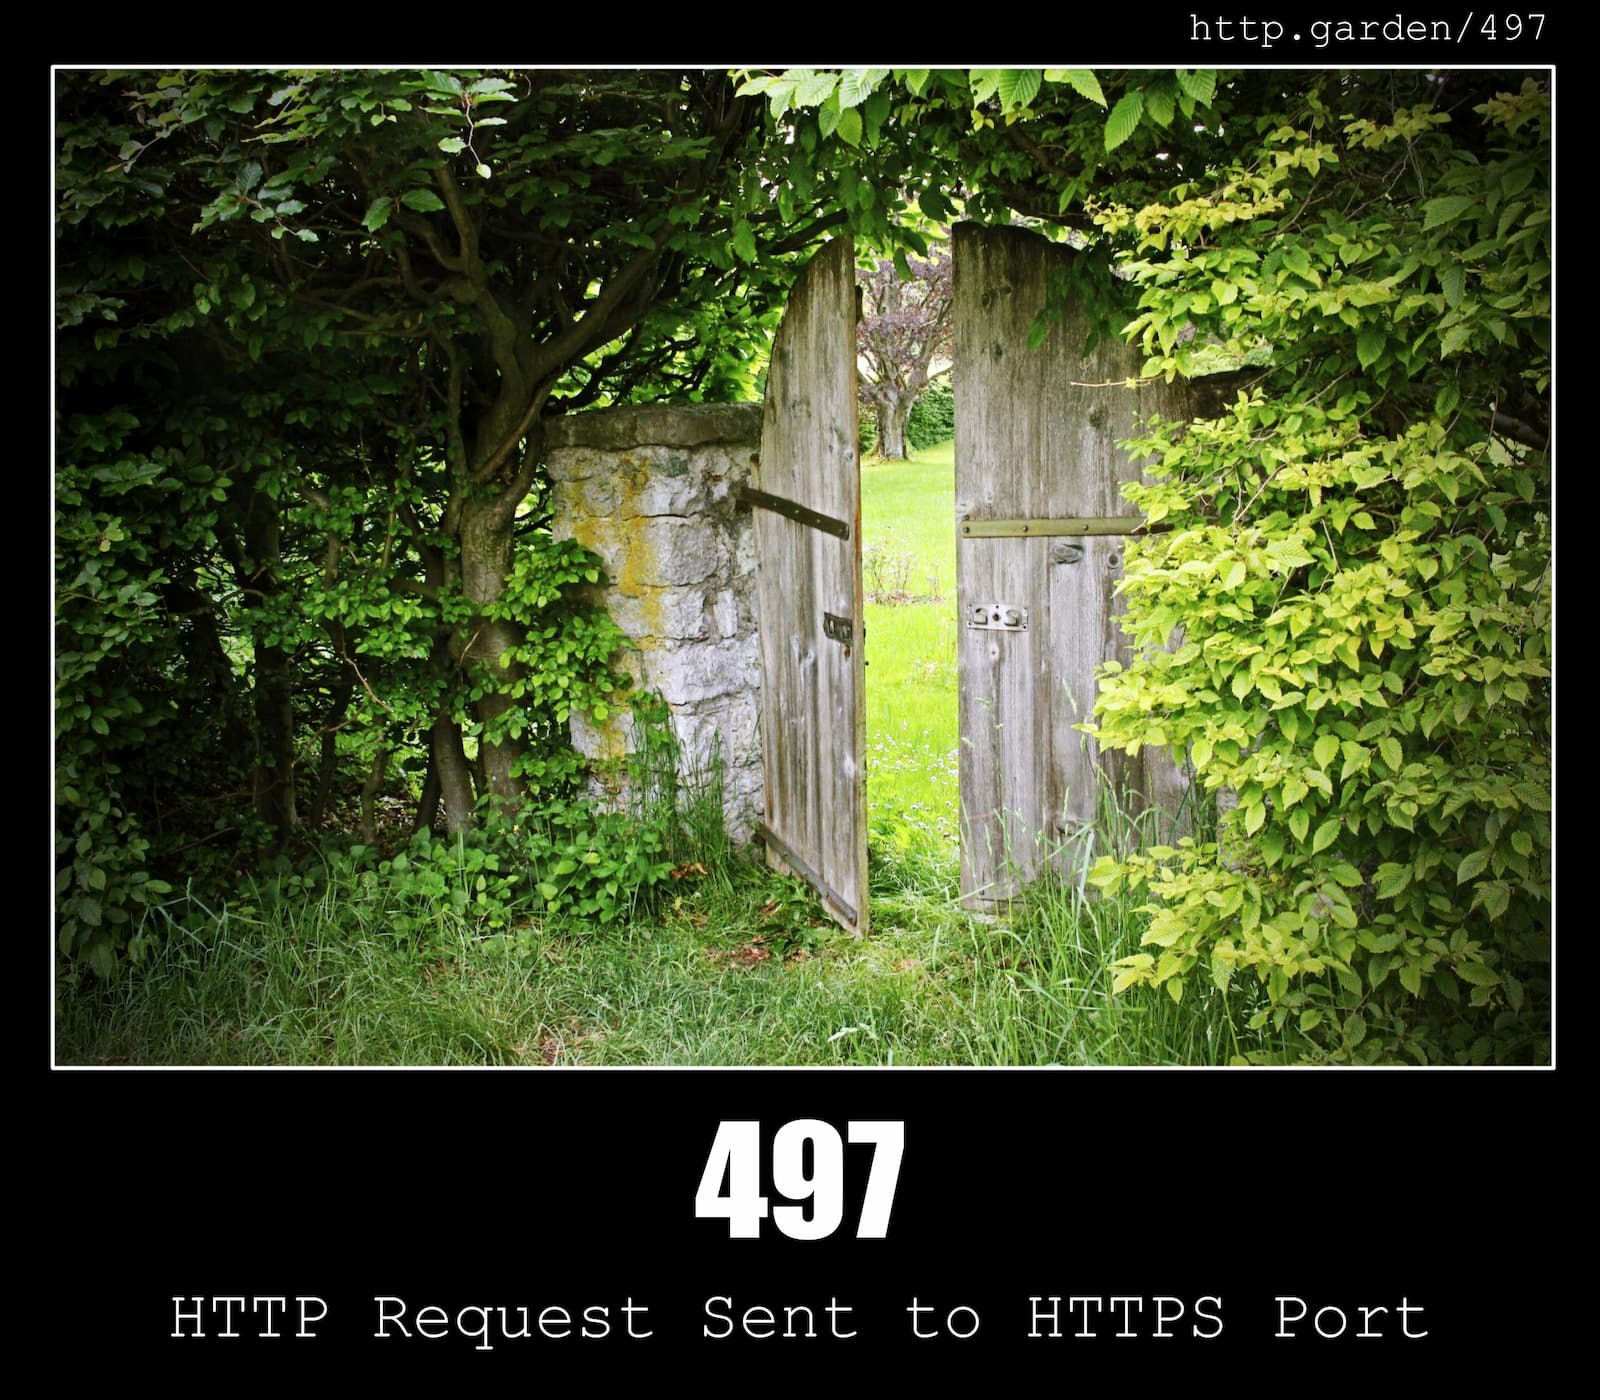 HTTP Status Code 497 HTTP Request Sent to HTTPS Port & Gardening